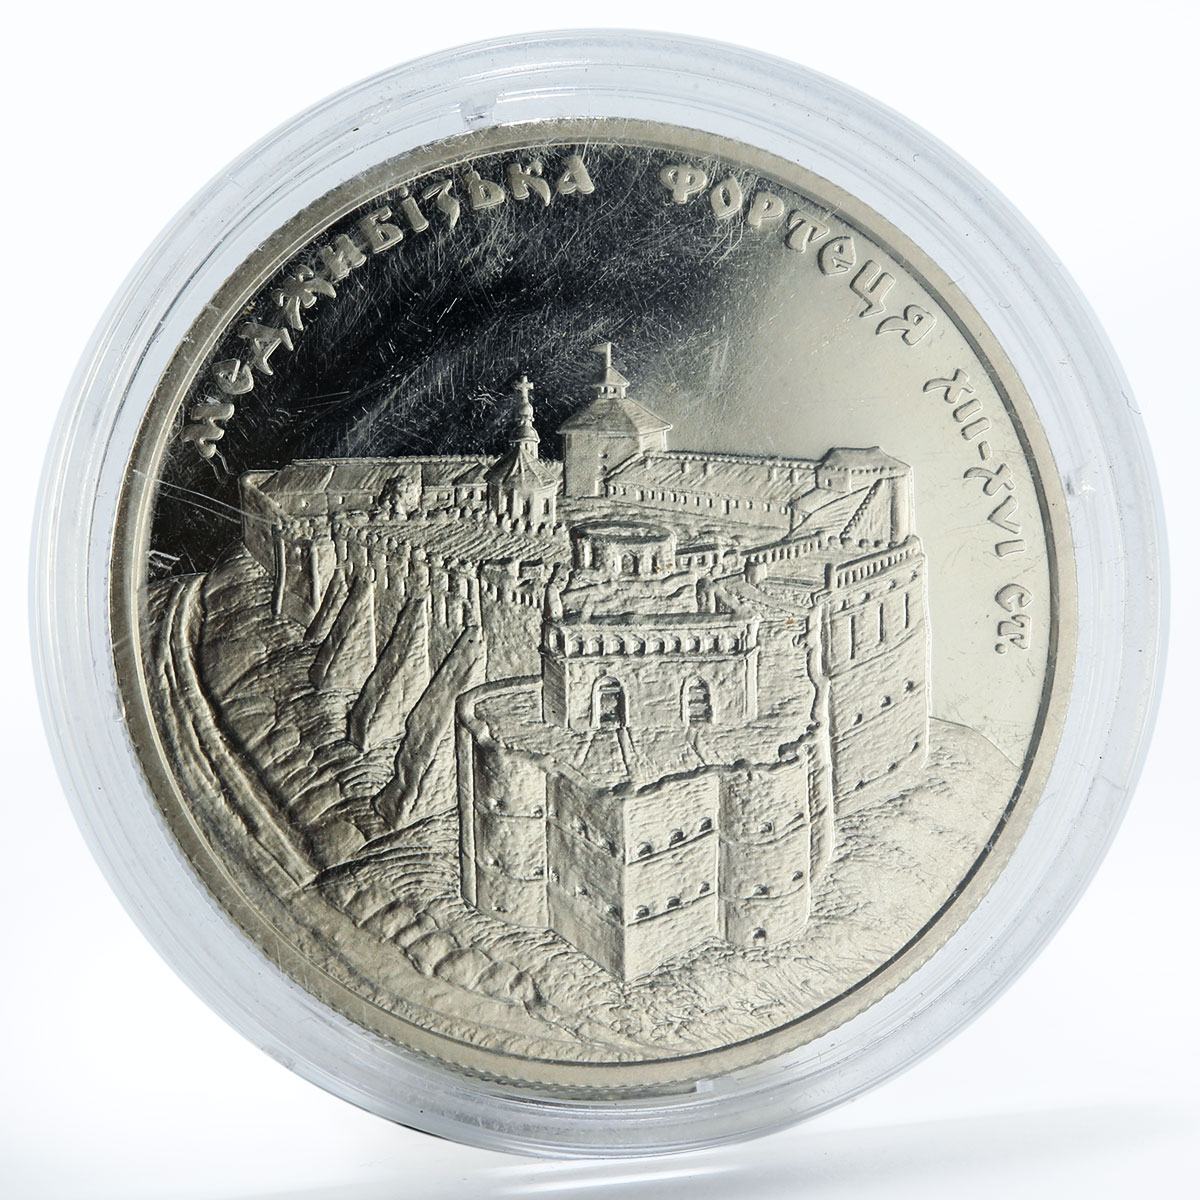 Ukraine 5 hryvnias Medzhybizh Fortress castle church nickel coin 2018